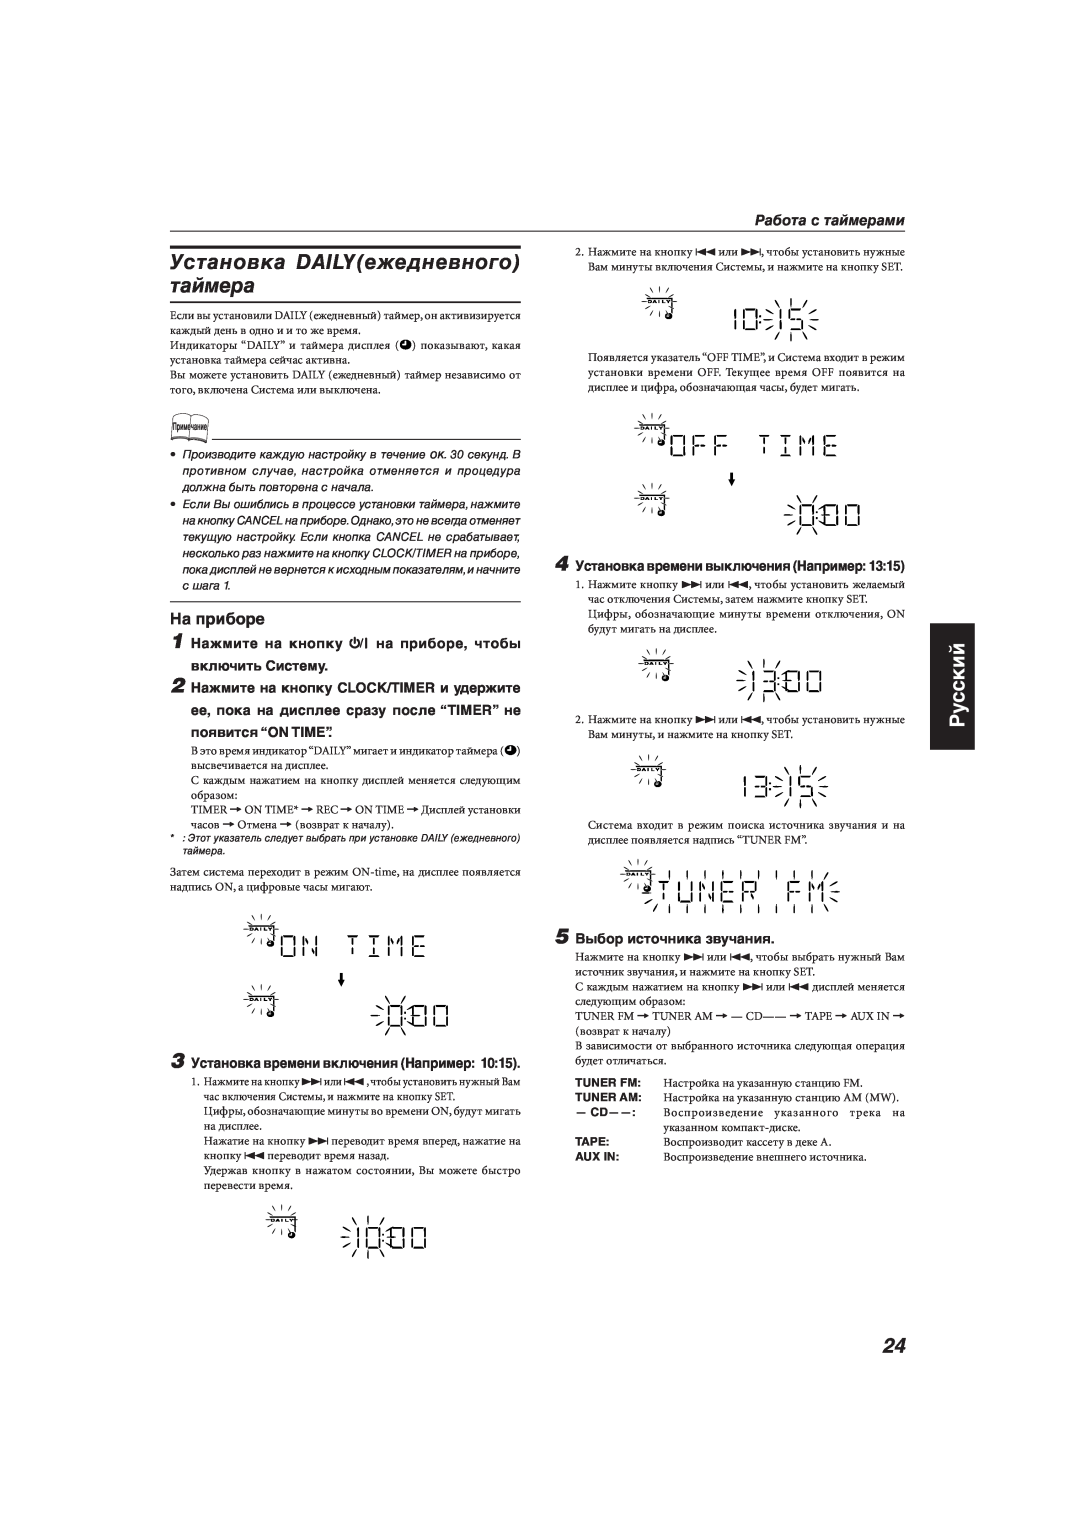 JVC MX-KA66 manual Установка DAILYежедневного таймера, Русский, Работа с таймерами, 4 Установка времени выключения Например 